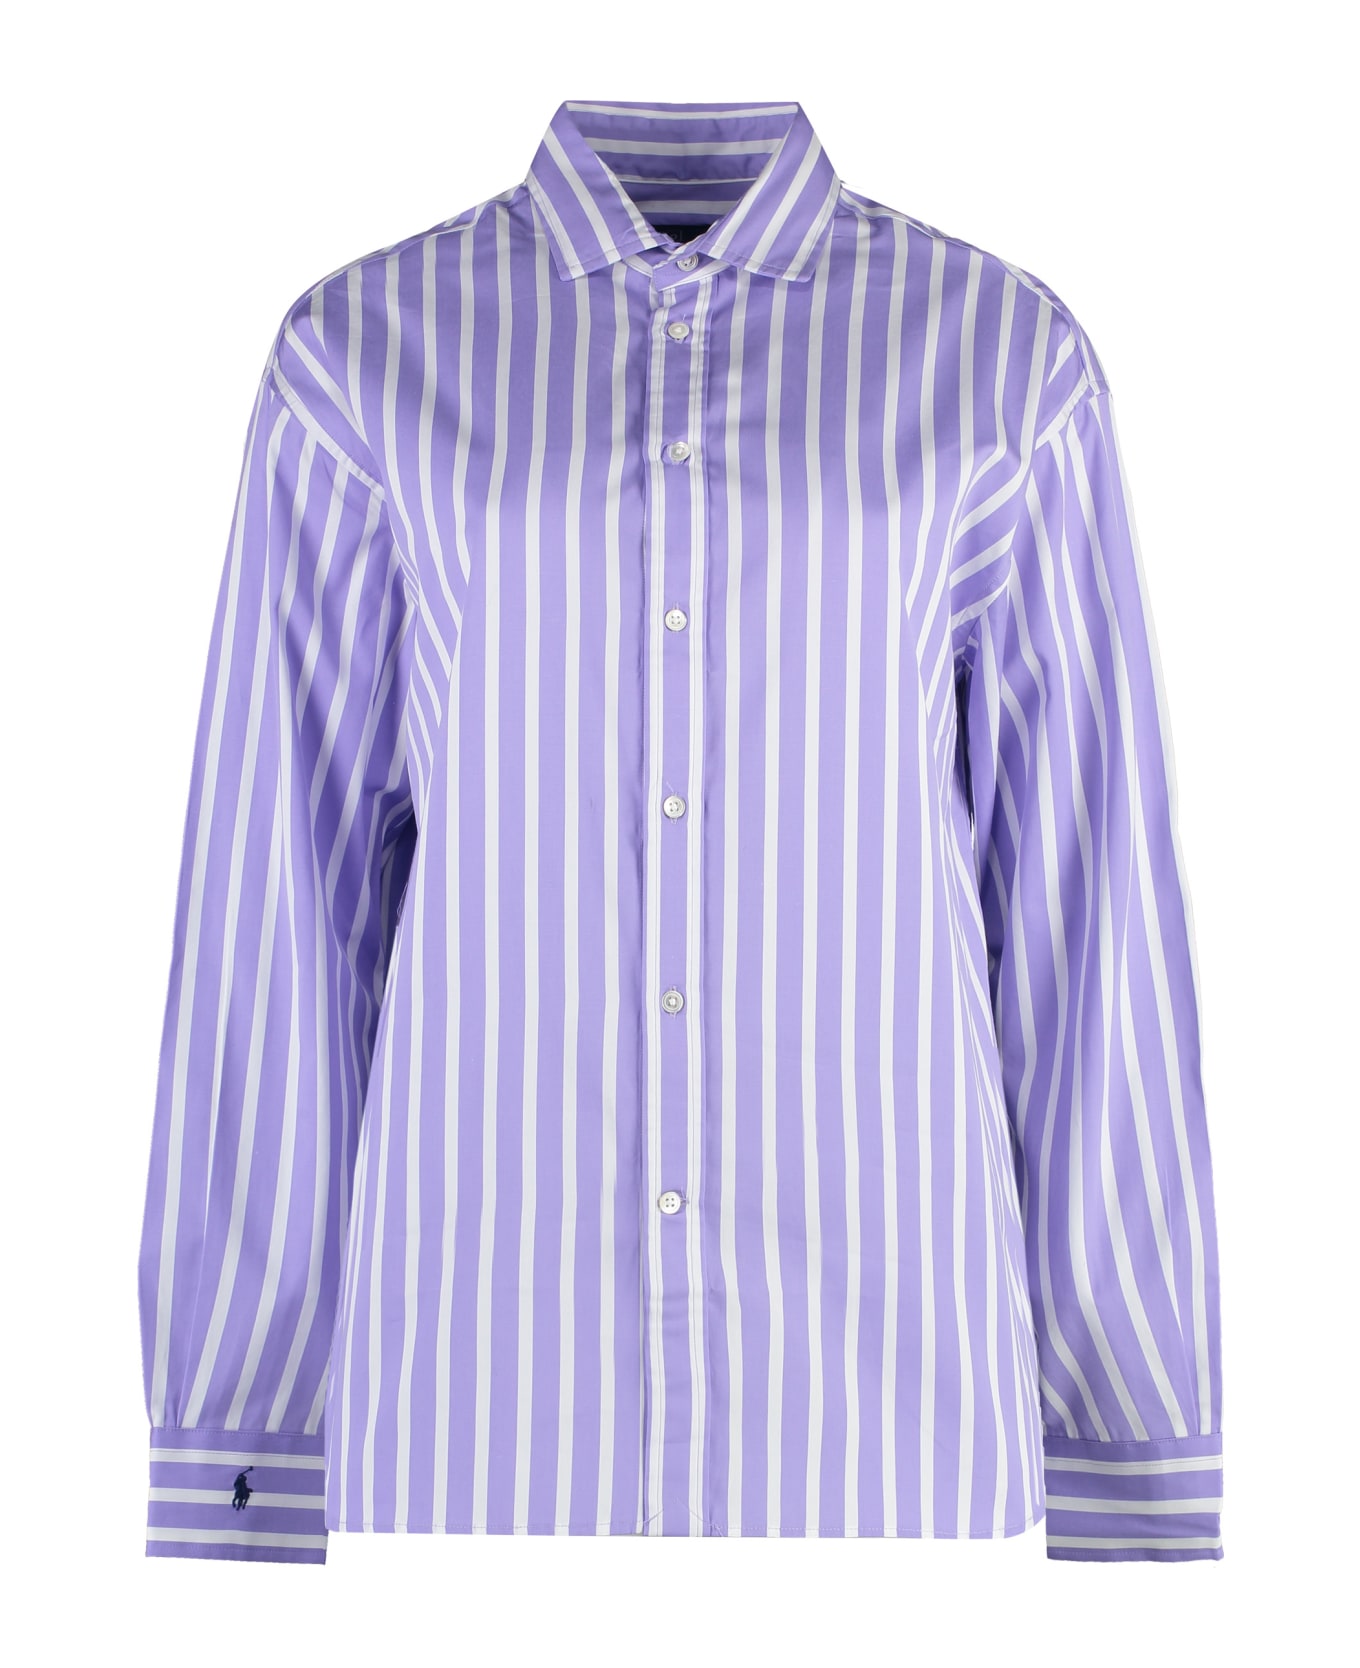 Polo Ralph Lauren Striped Cotton Shirt - Lilac